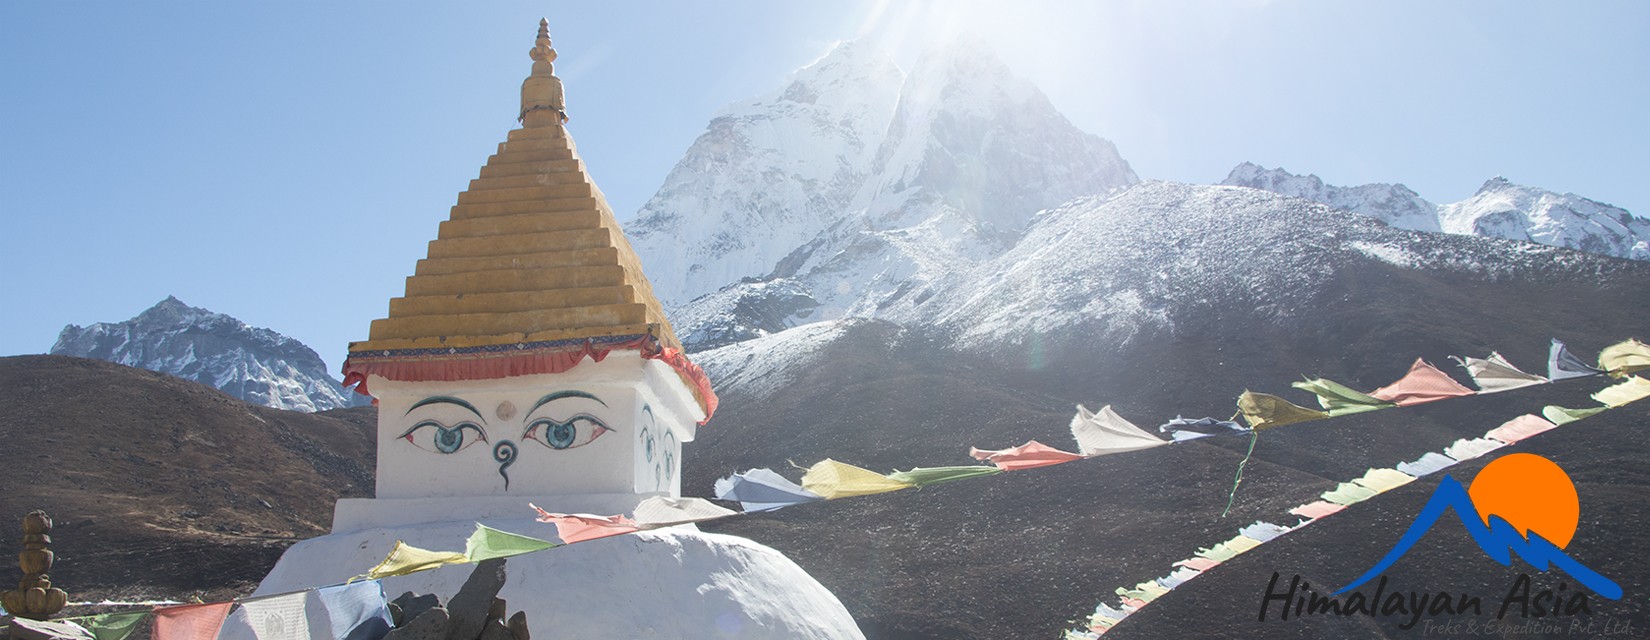 Monastery-in-Everest